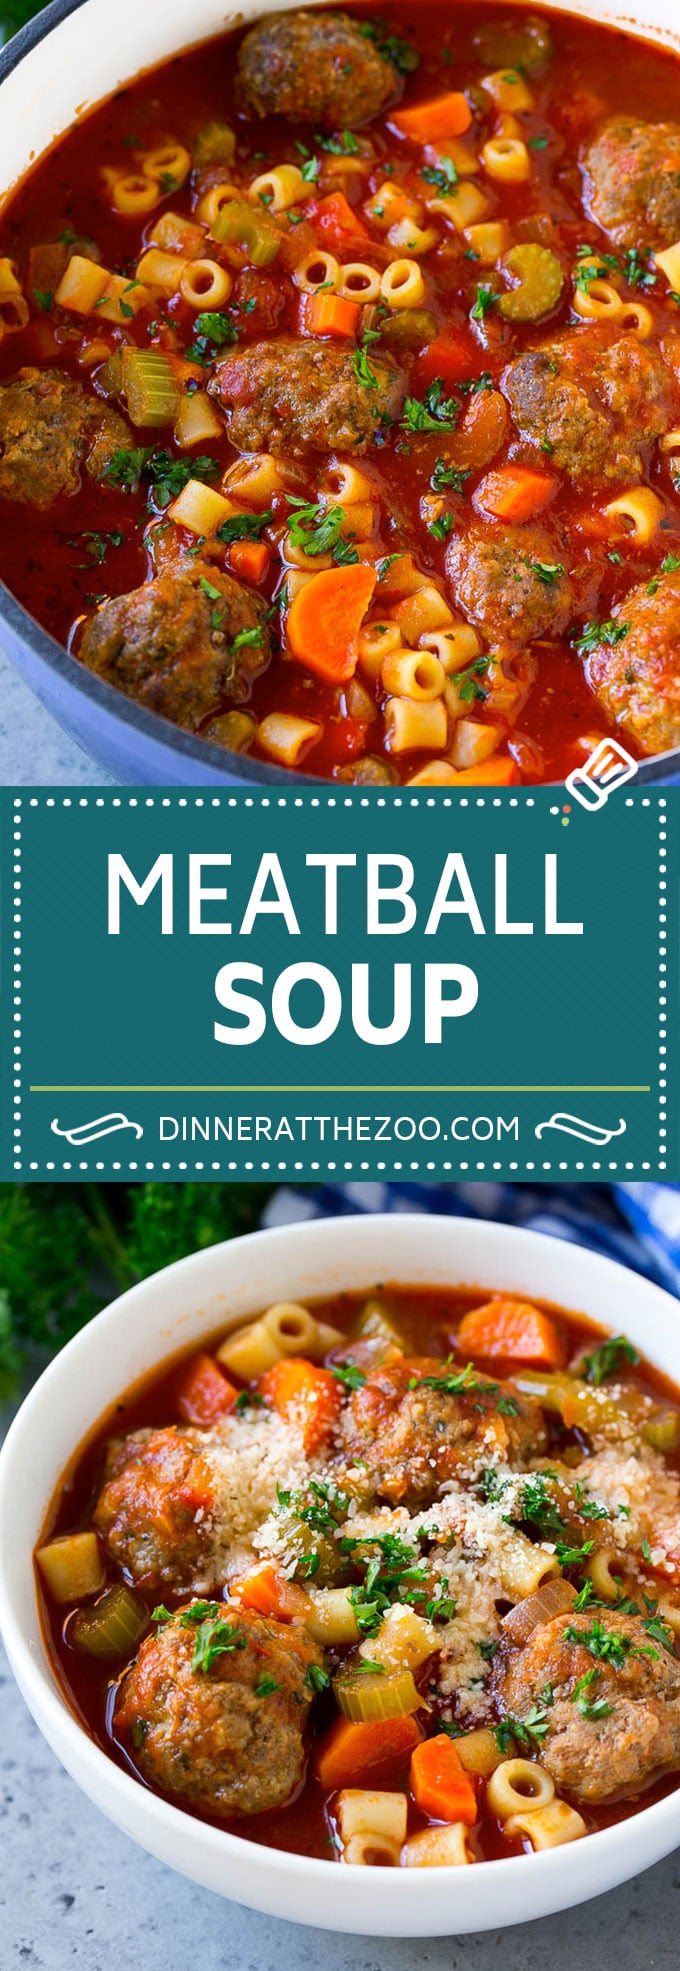 Italian Meatball Soup Recipe | Meatball Soup | Beef Meatballs #meatballs #beef #soup #italian #dinner #dinneratthezoo #comfortfood